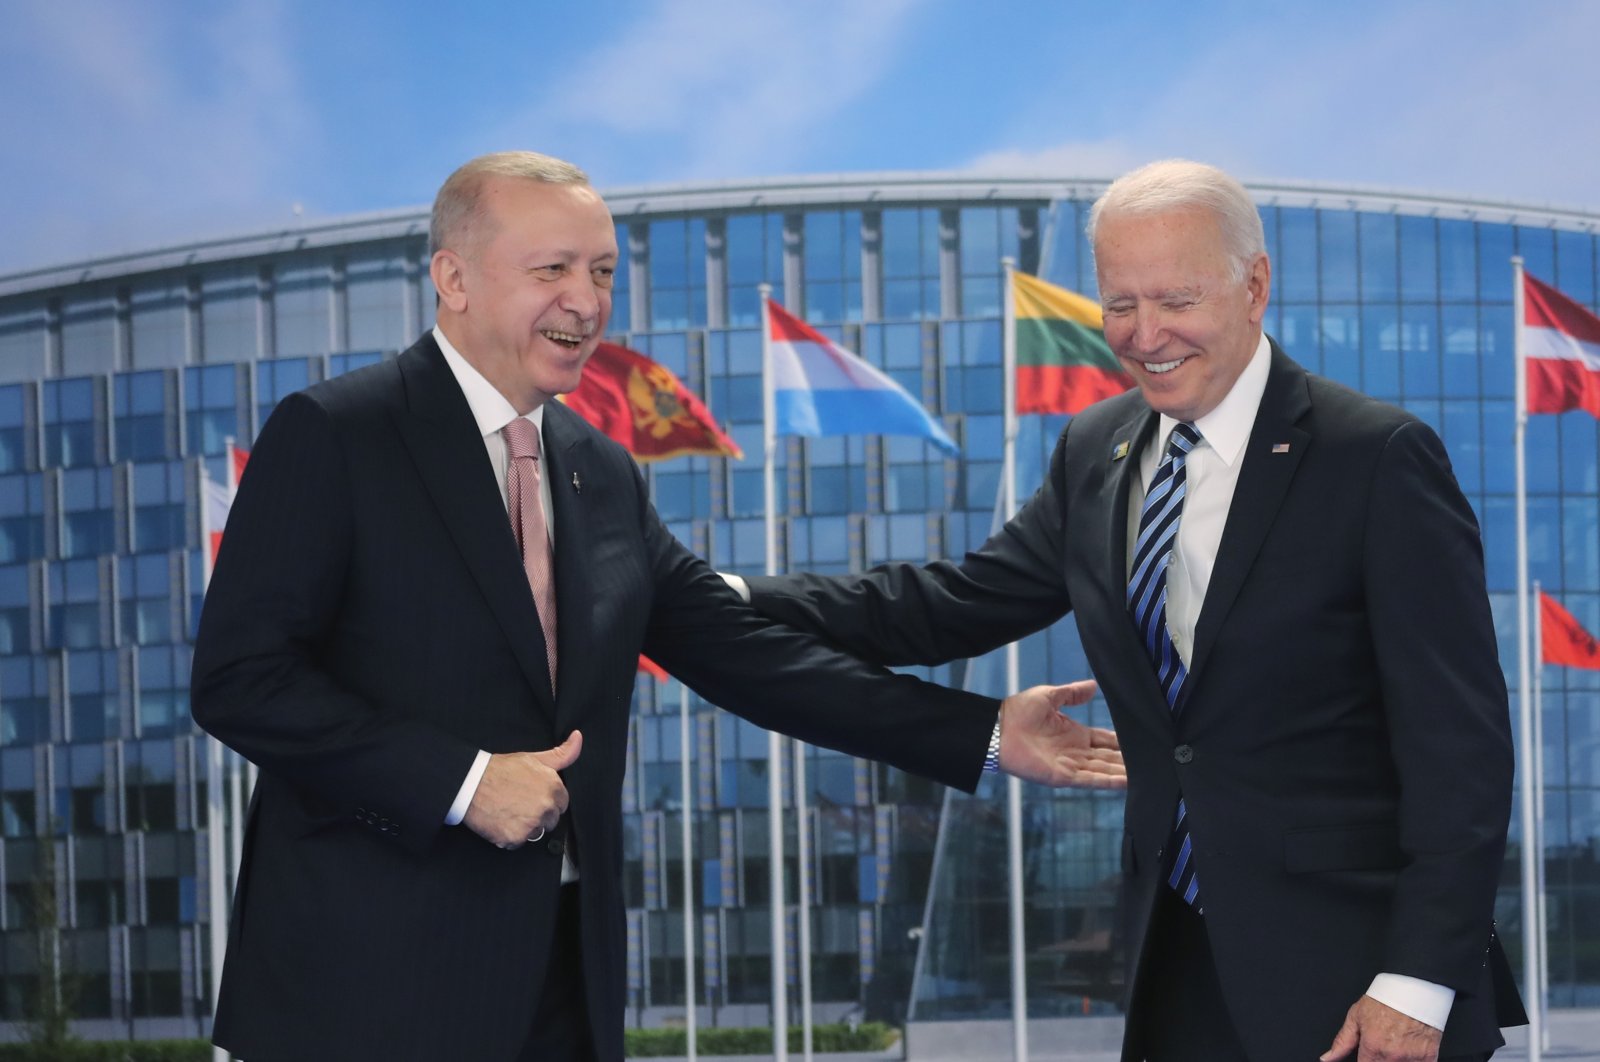 President Recep Tayyip Erdoğan and his U.S. counterpart Joe Biden gesture during their meeting at the NATO headquarters in Brussels, Belgium, June 14, 2021. (DHA Photo)